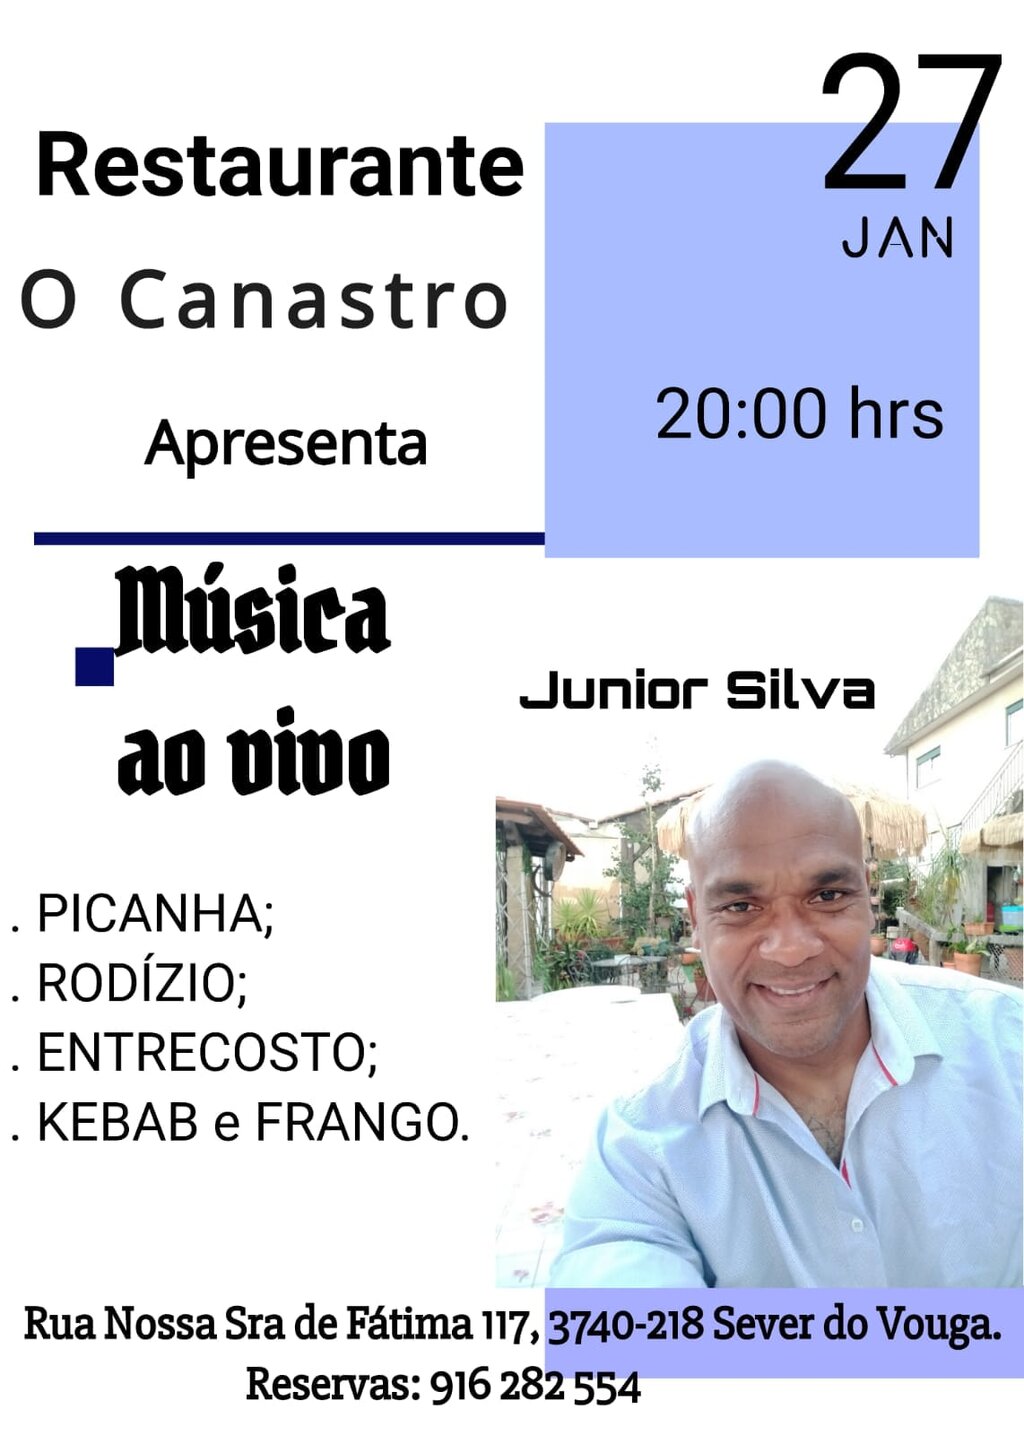 27 jan - Musica ao Vivo - Restaurante O Canastro